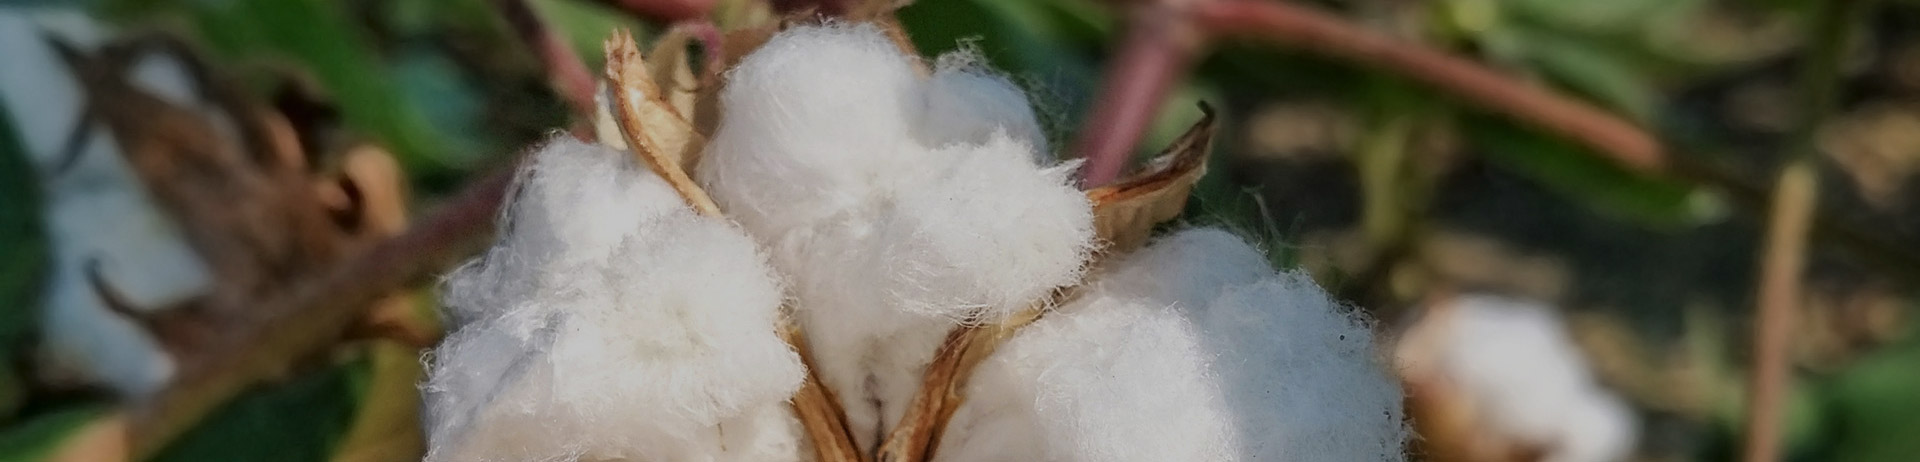 La era del algodón